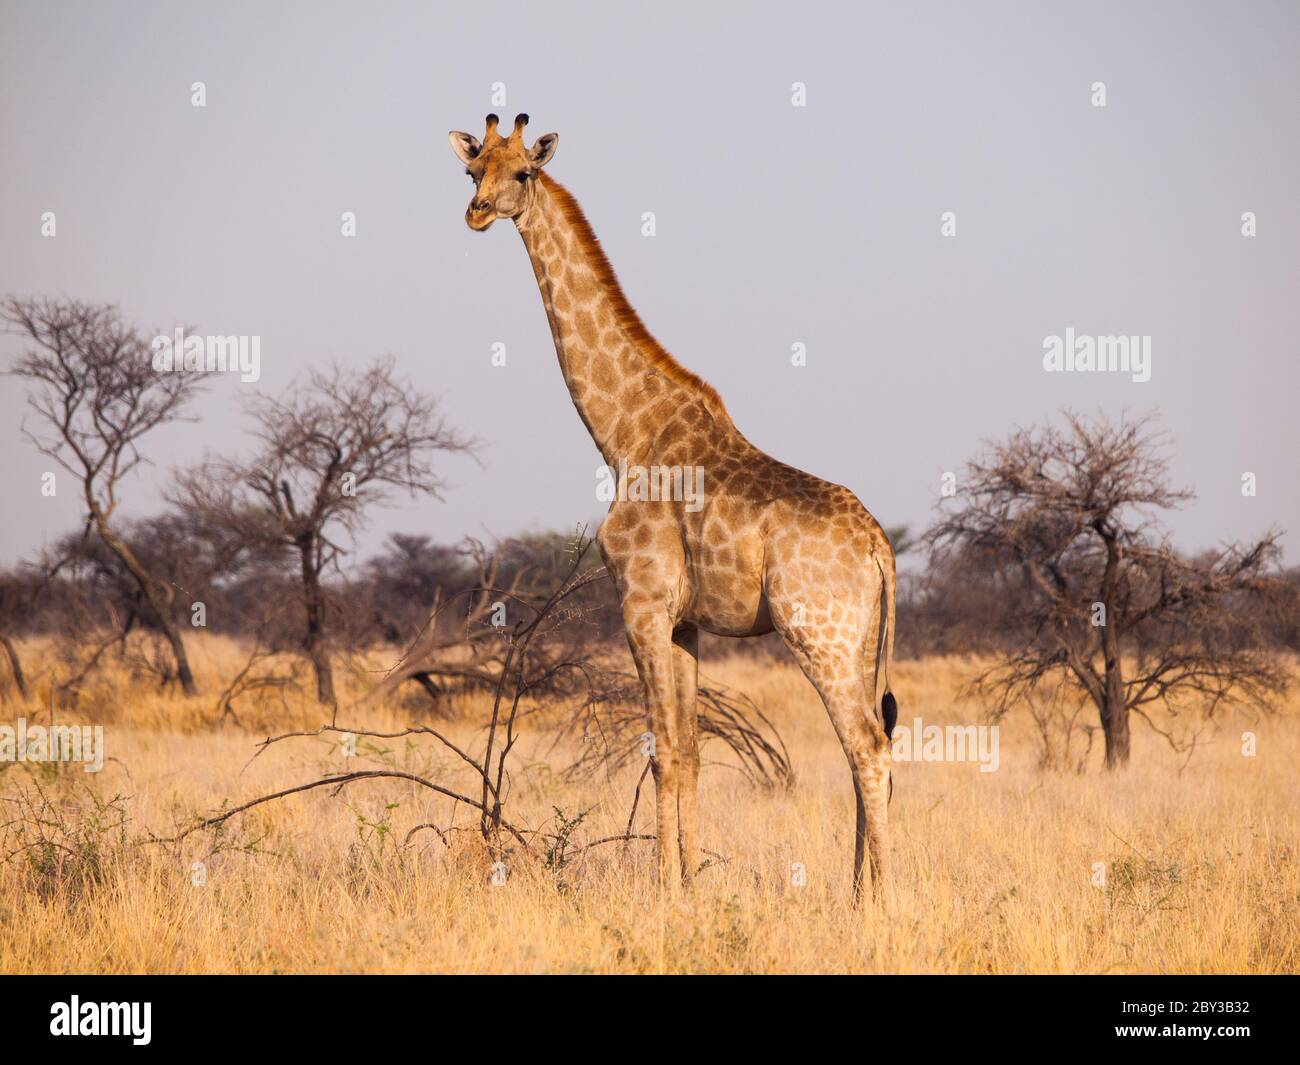 Giraffe in savanna (Etosha national park, Namibia) Stock Photo